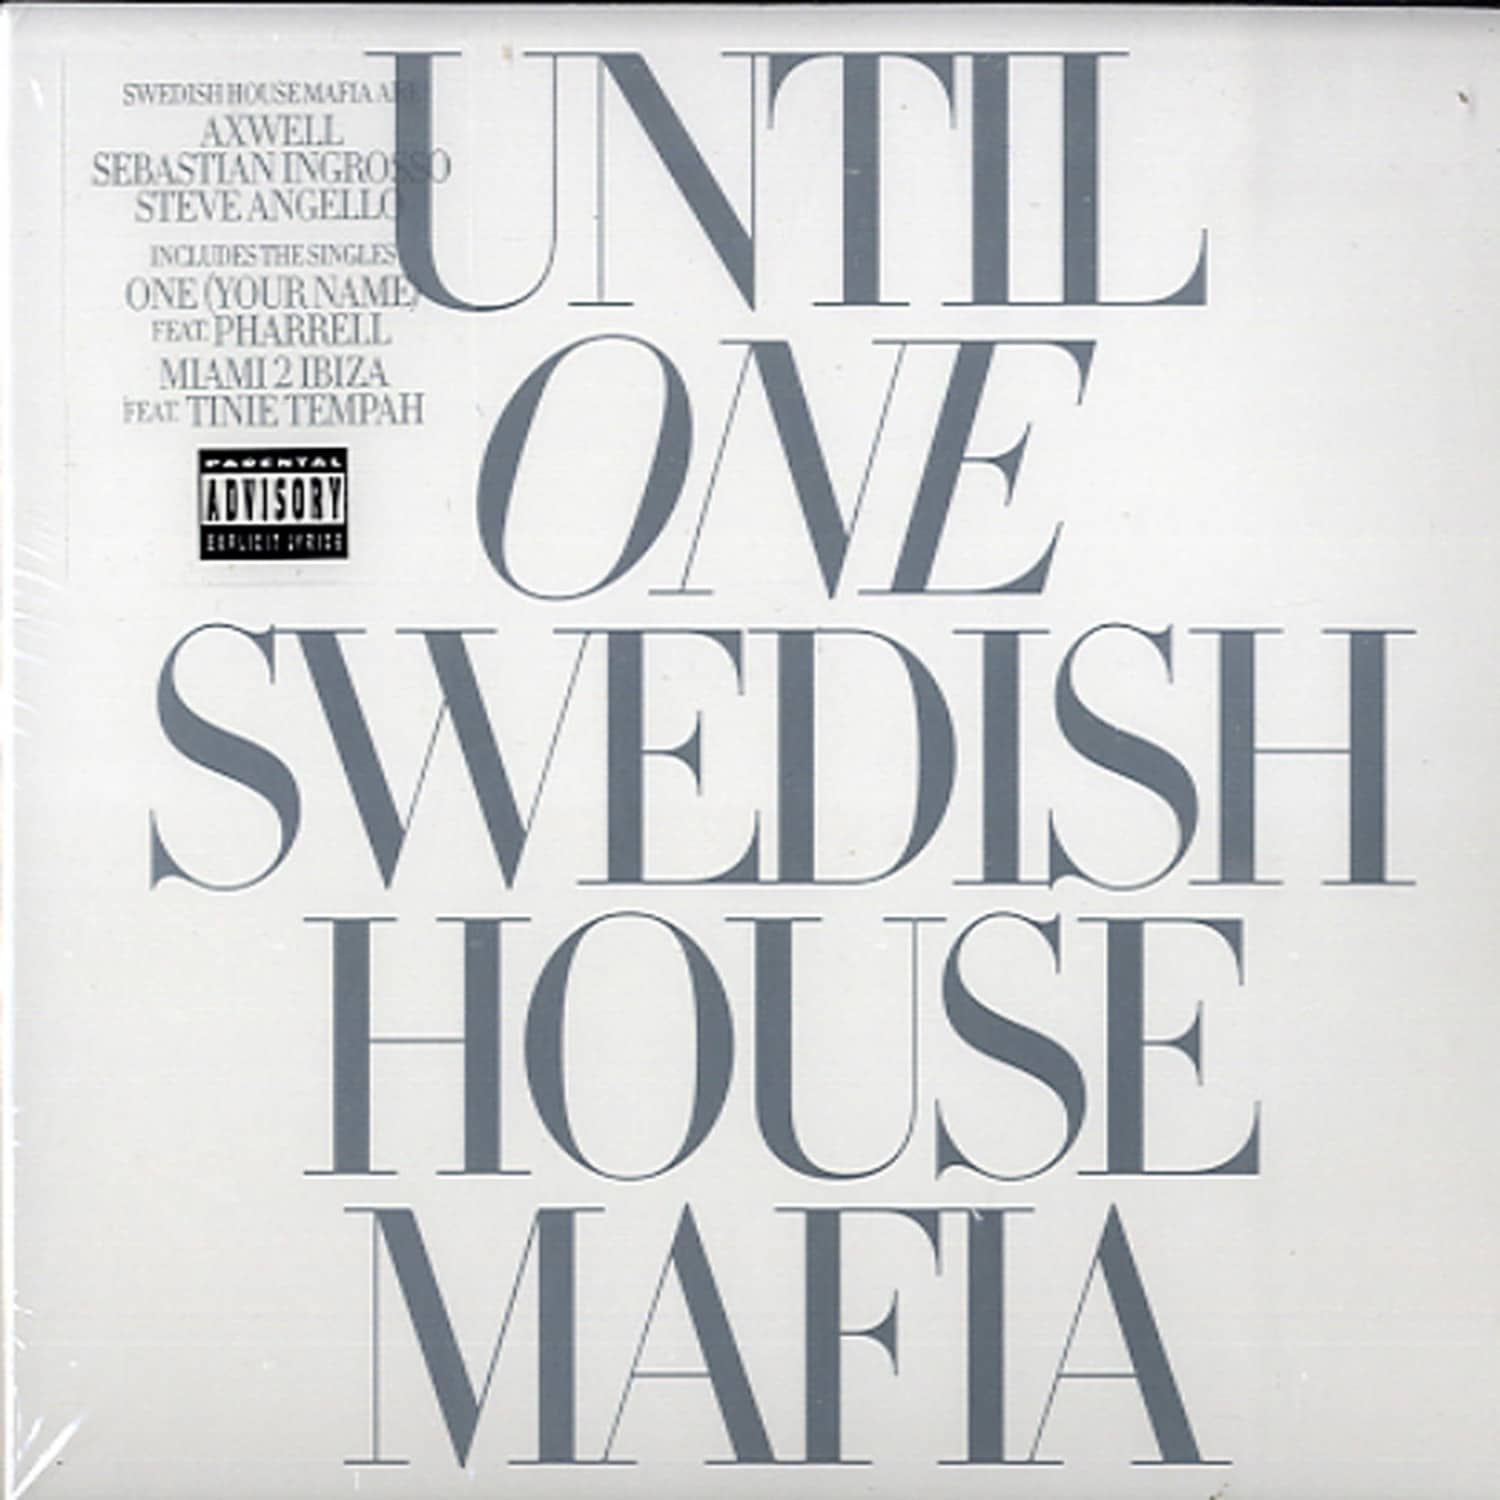 swedish house mafia miami 2 ibiza